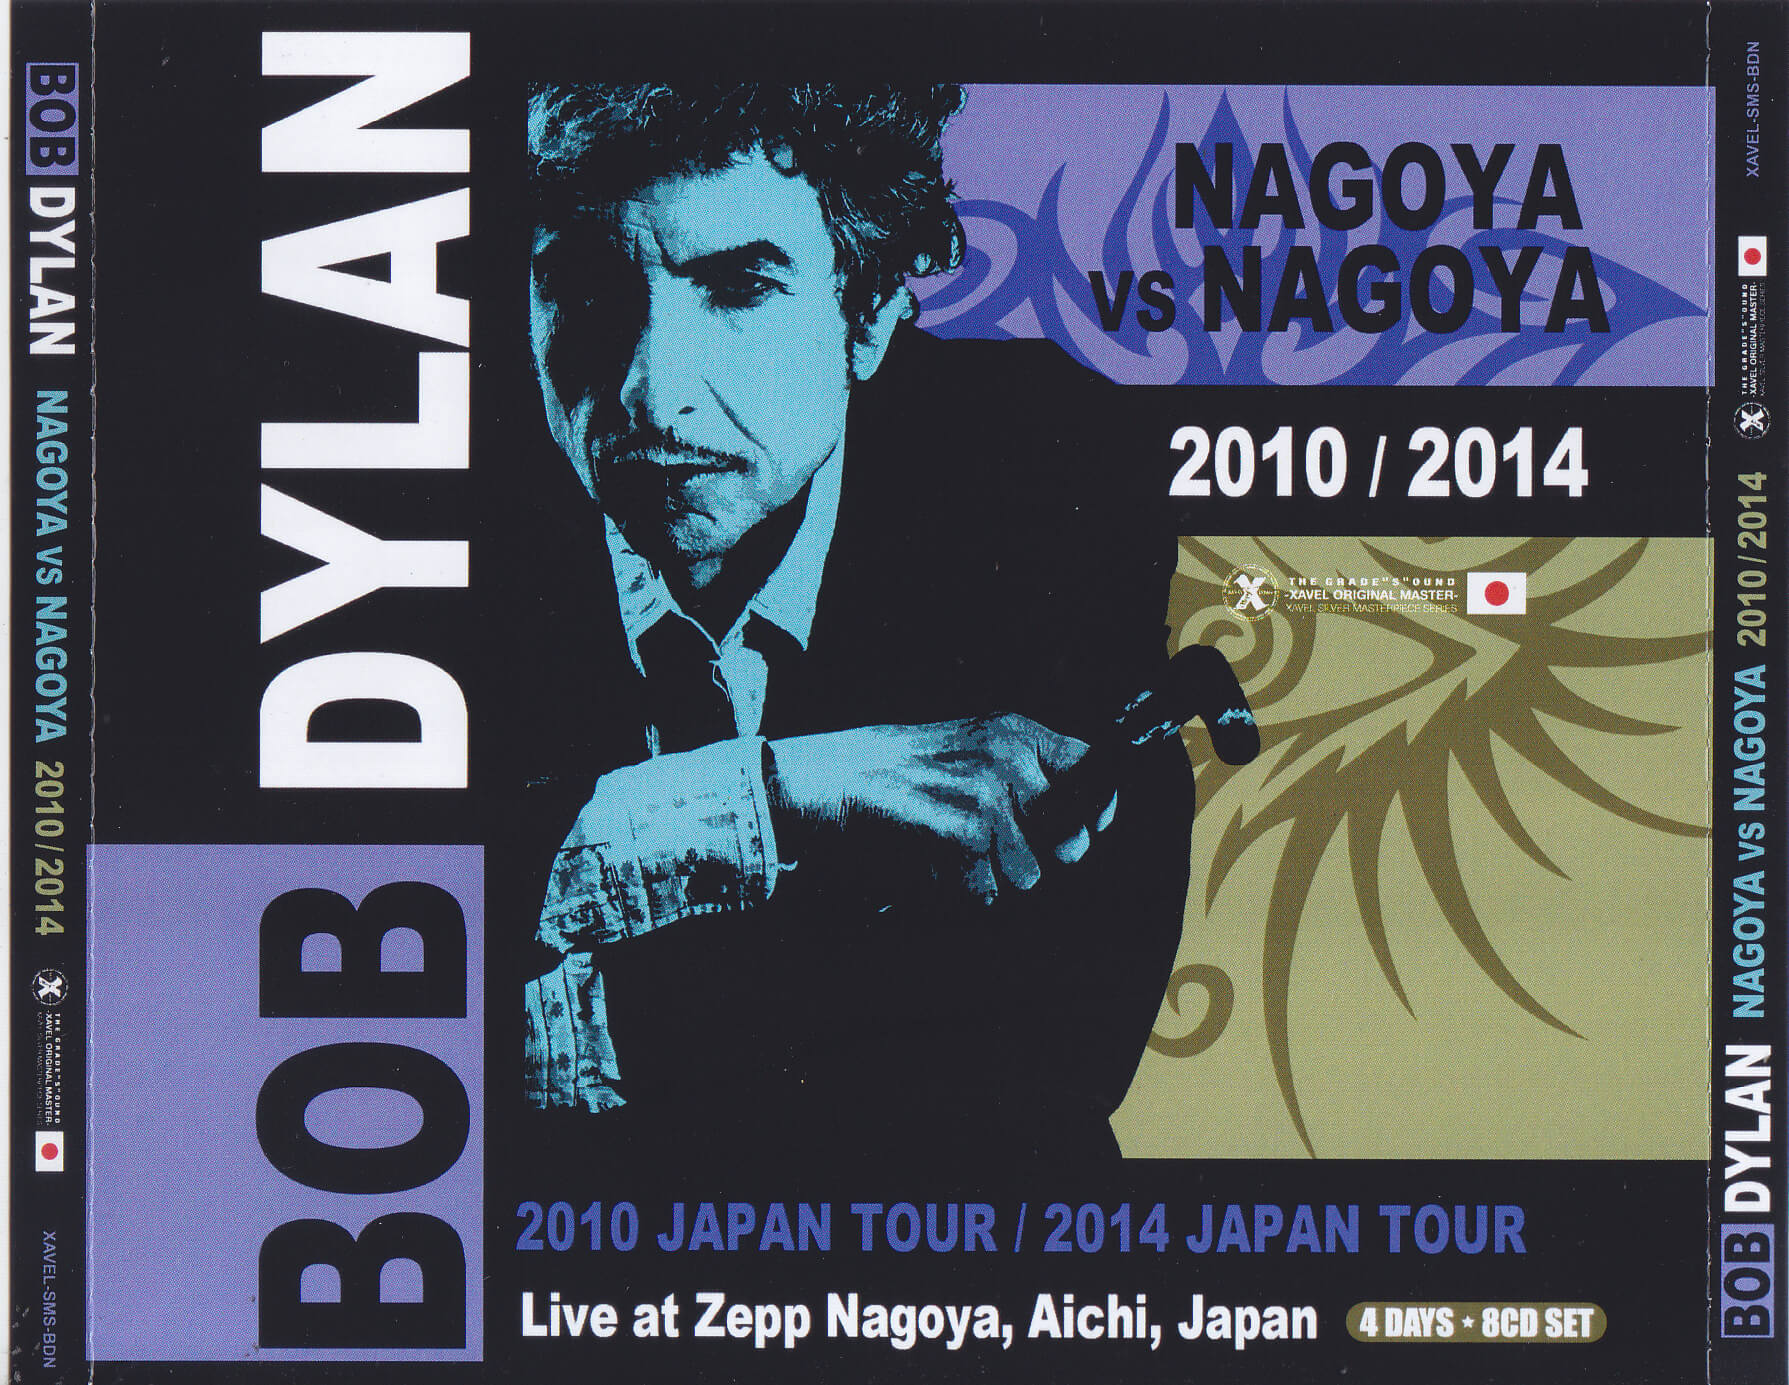 Bob Dylan / Nagoya VS Nagoya 2010/2014 / 8CD – GiGinJapan